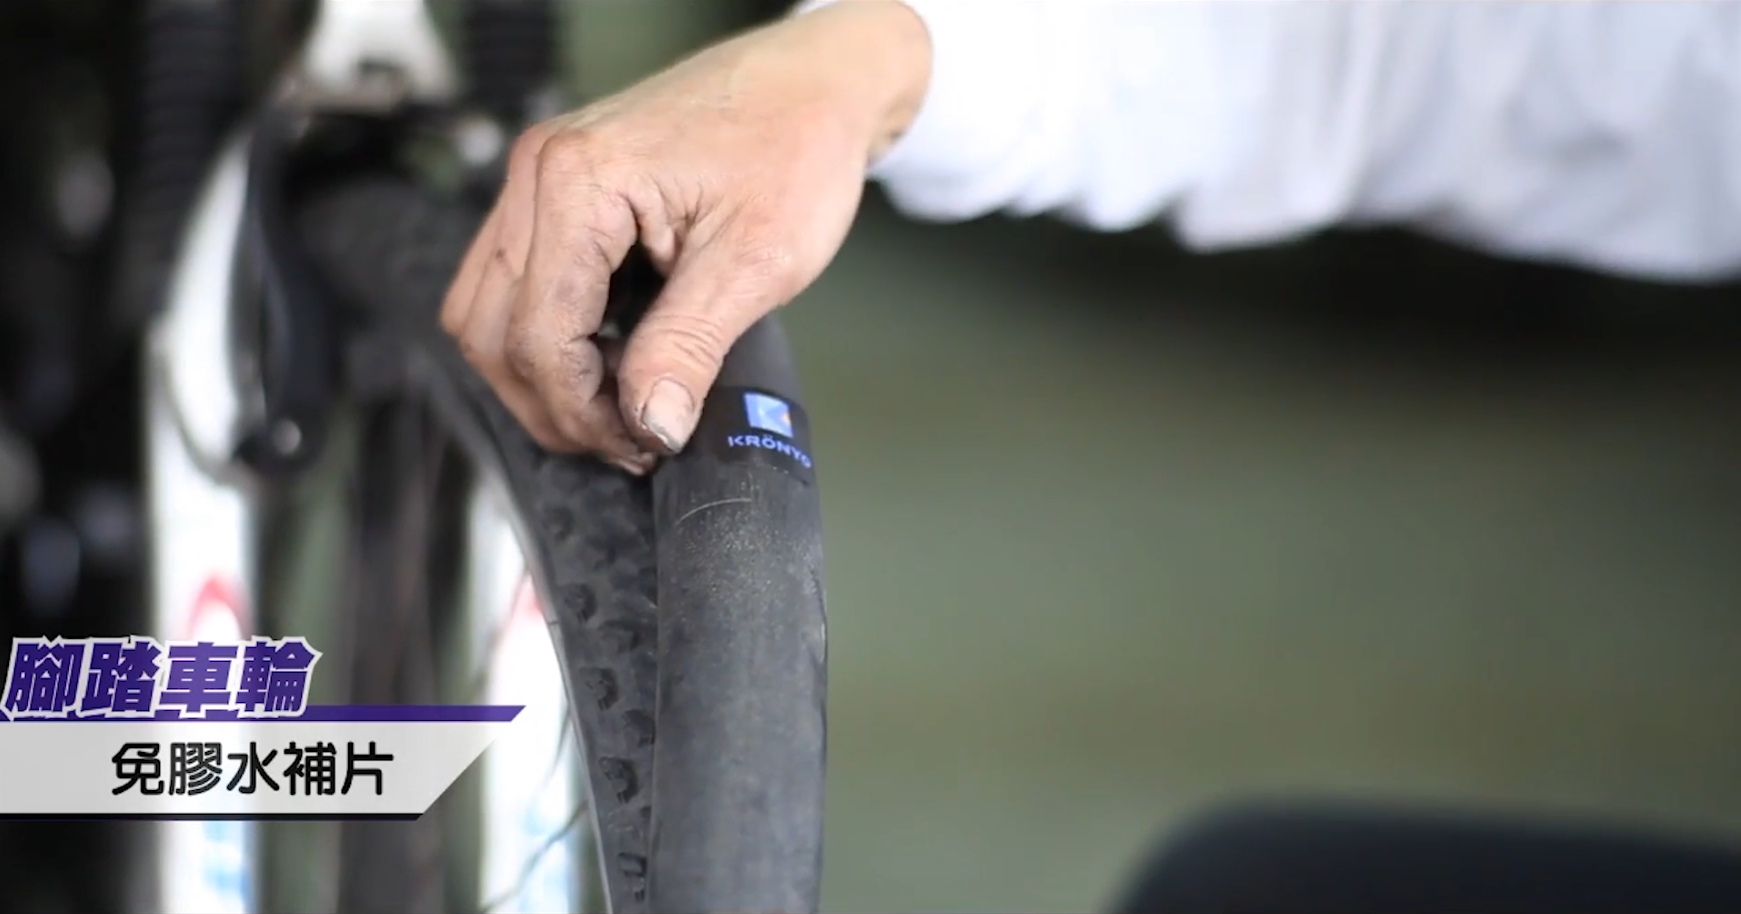 Bicycle inner tube repair- Glueless Patch